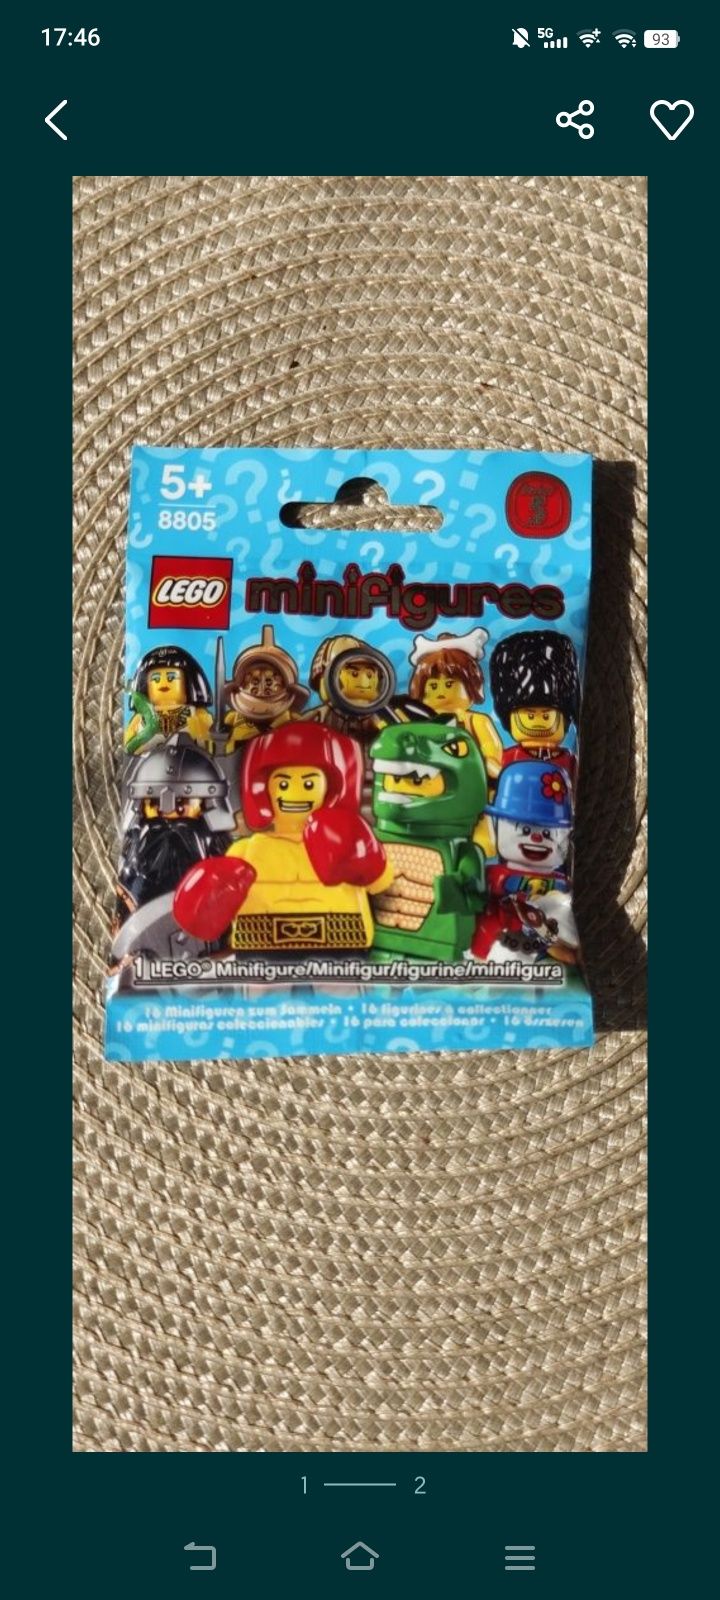 LEGO minifigures series 5 - Lizard, Jaszczurka